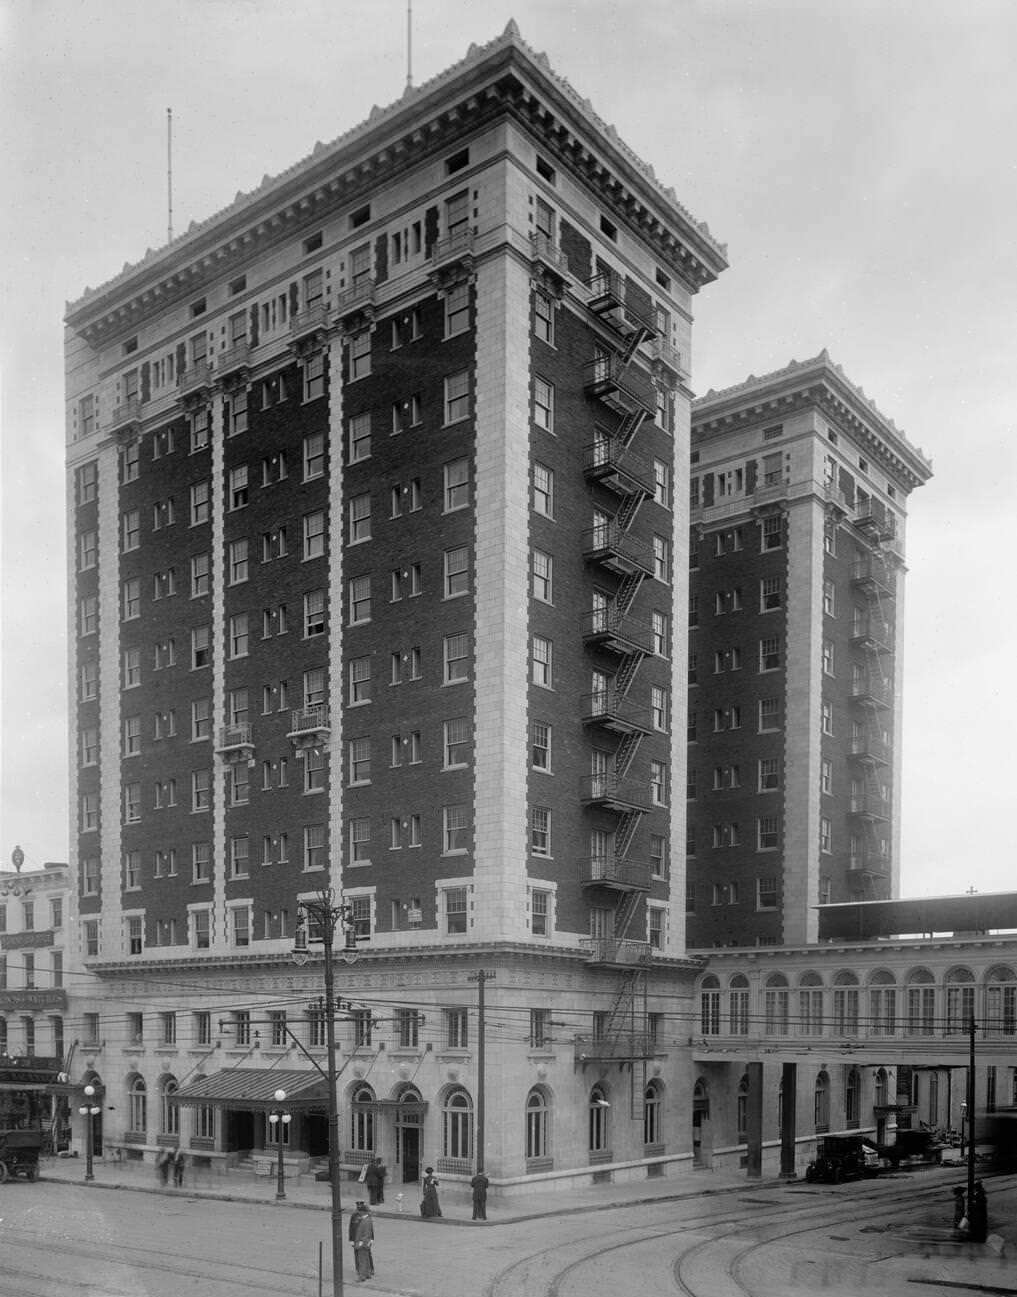 Murphy's Hotel, Richmond, 1920s